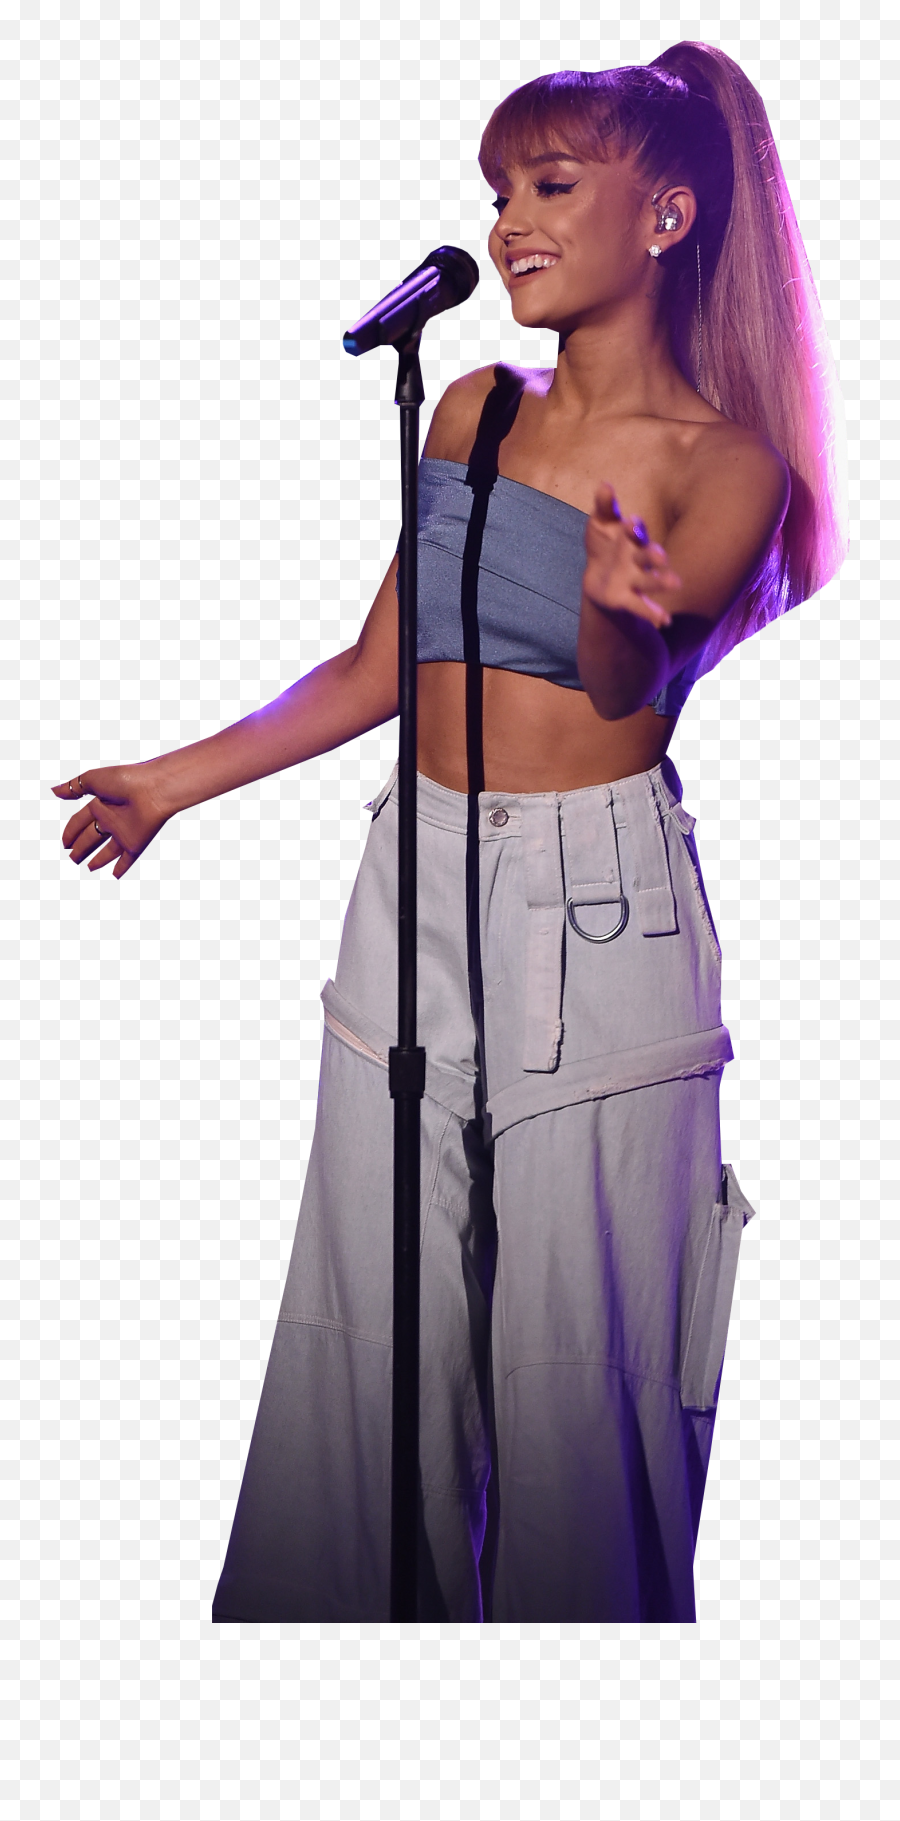 Ariana Grande - Ariana Grande Png,Ariana Grande Transparent Background